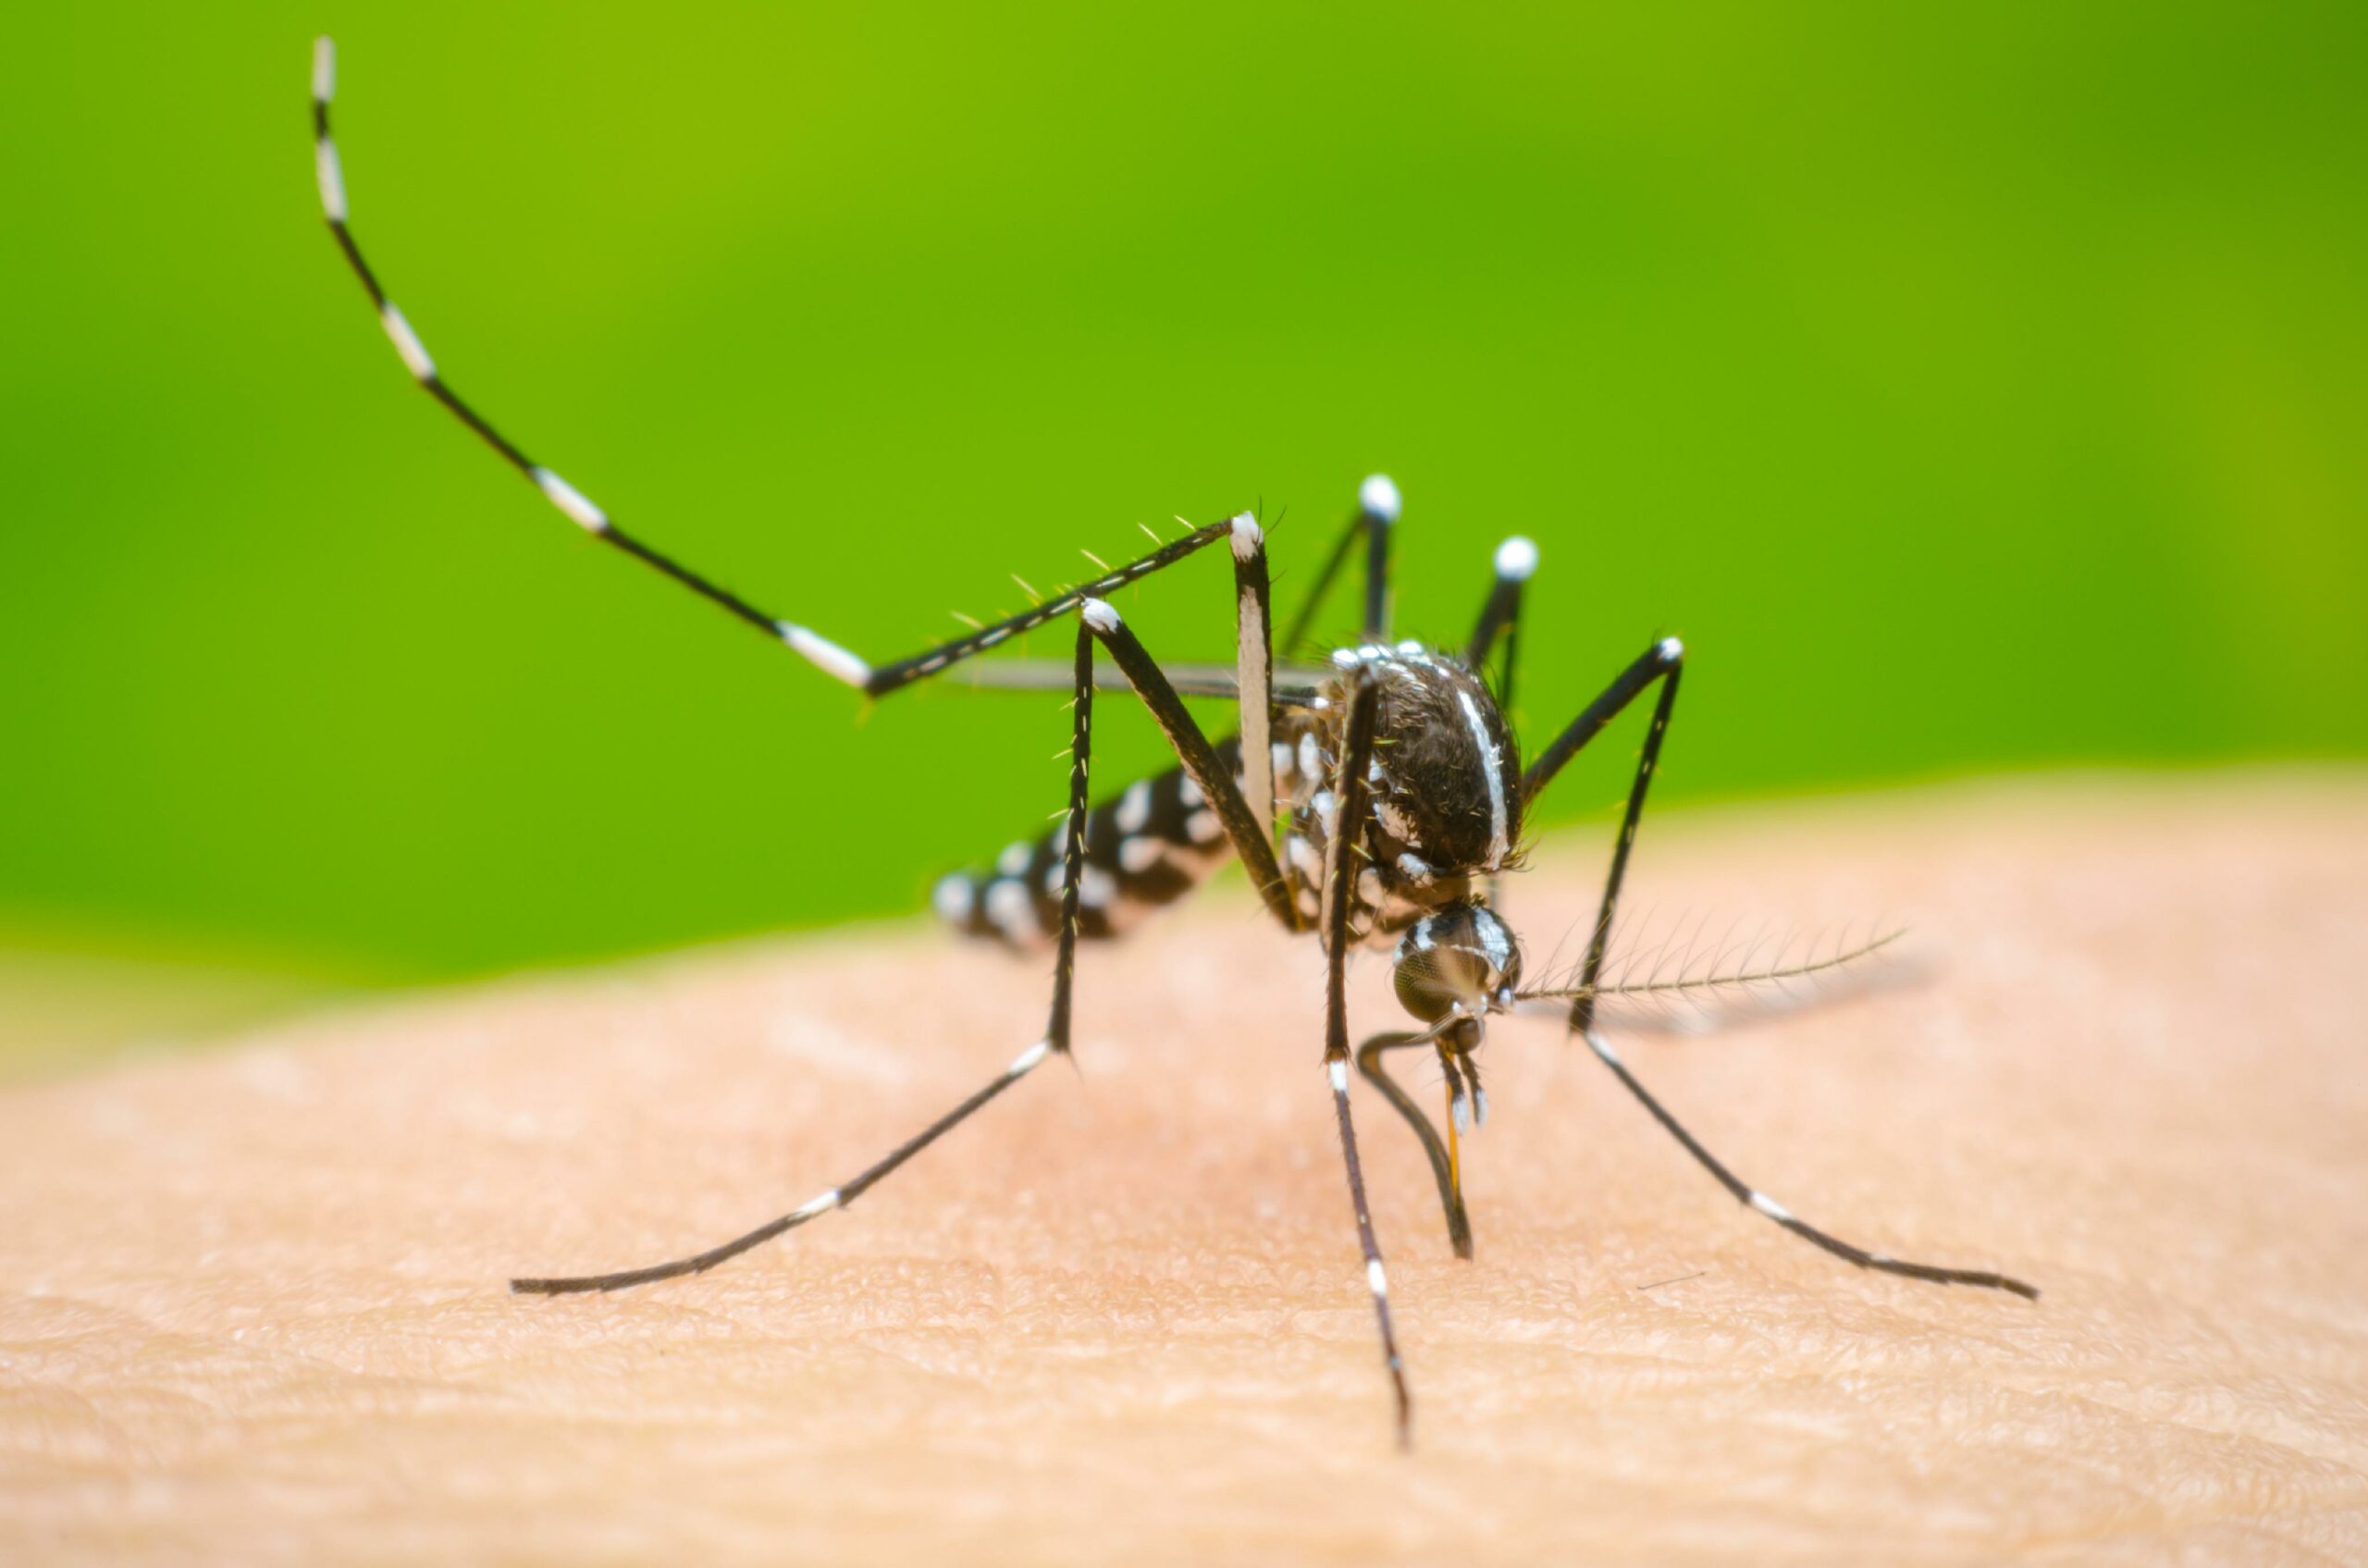 Dengue cases surge across 57 districts, Health Ministry urges precautions